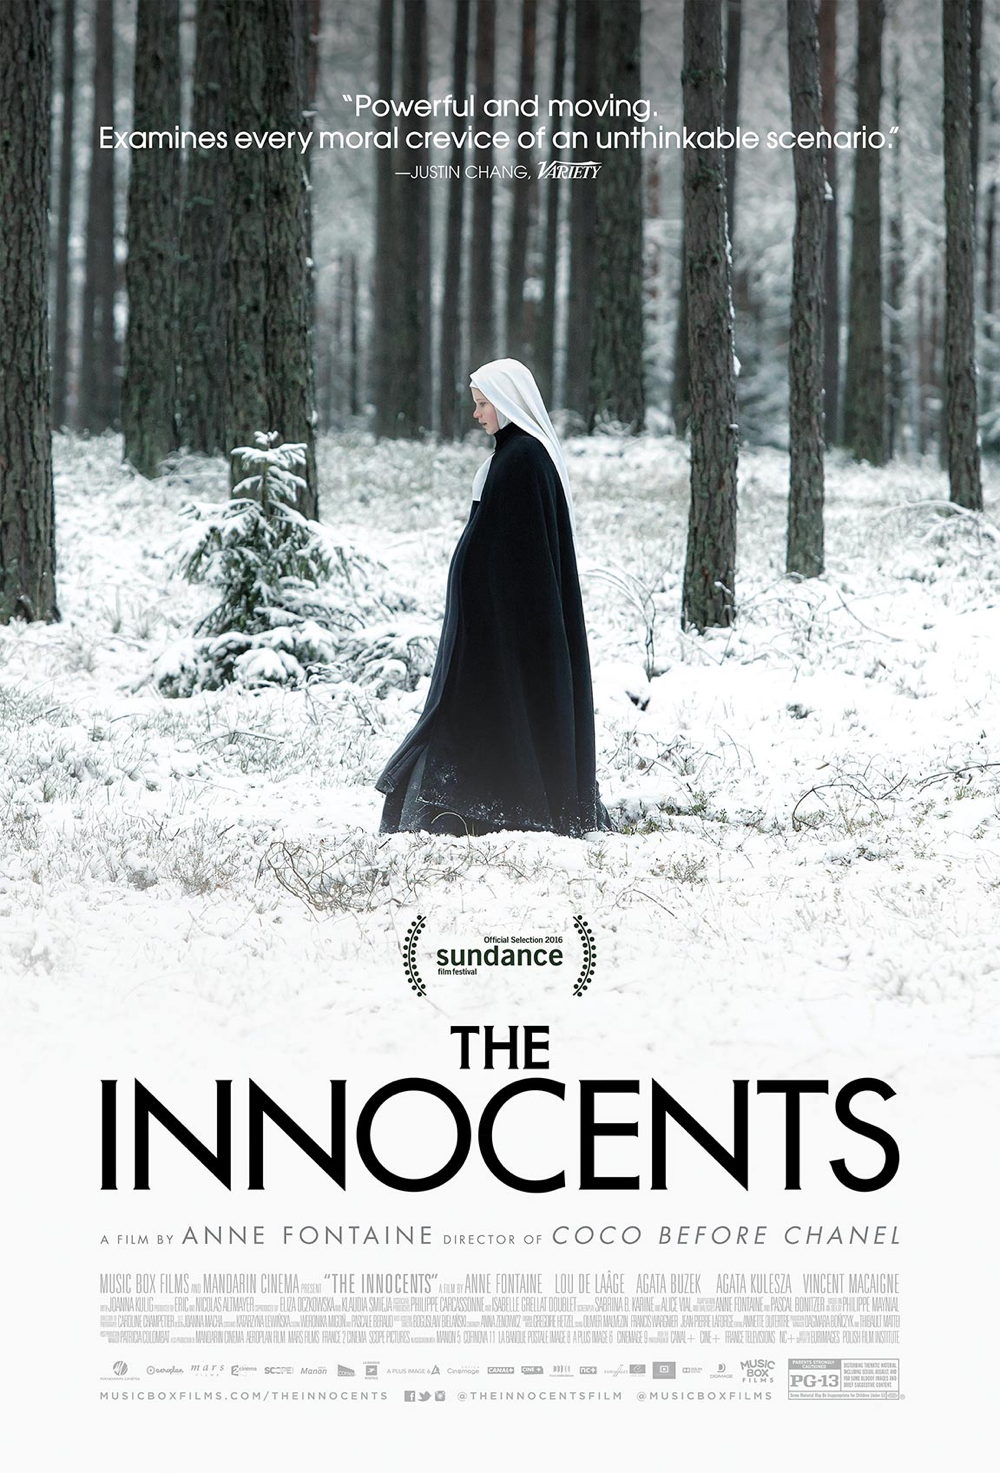 moviegoer.com: THE INNOCENTS movie poster